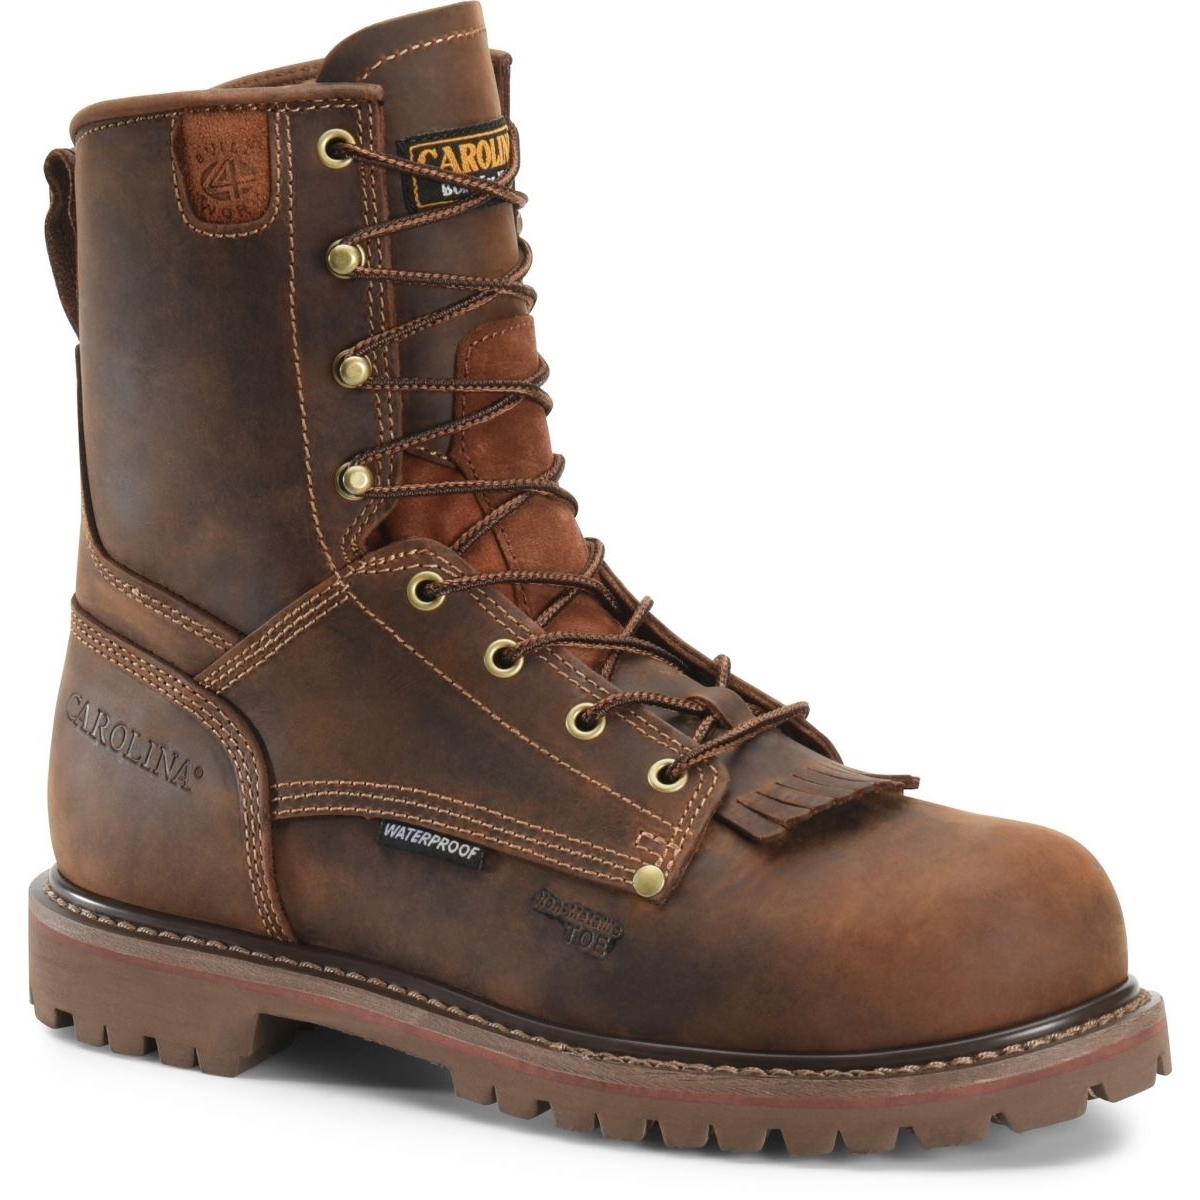 CAROLINA Men's 28 Series 8 Composite Toe Waterproof Work Boot Brown - CA8528 DARK BROWN - DARK BROWN, 9